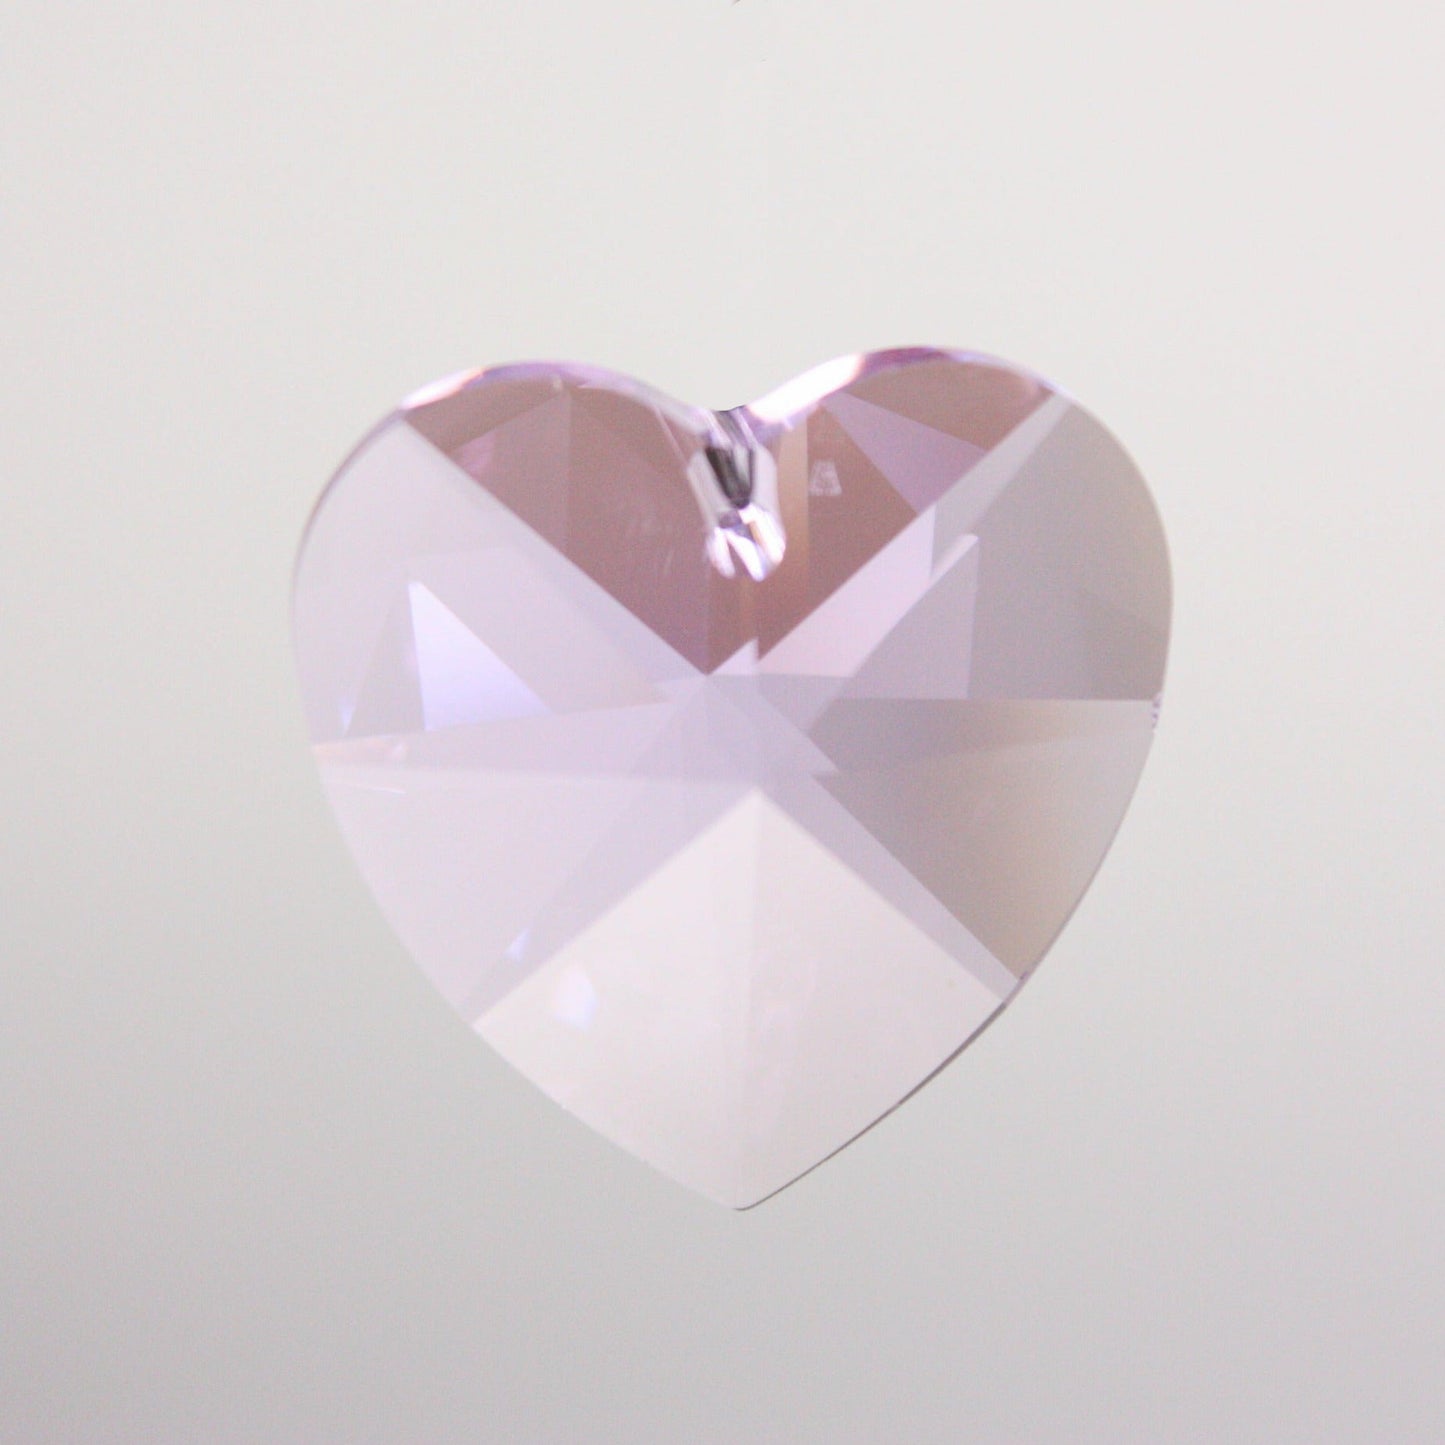 SWAROVSKI® STRASS 28mm Colored Heart Pendant